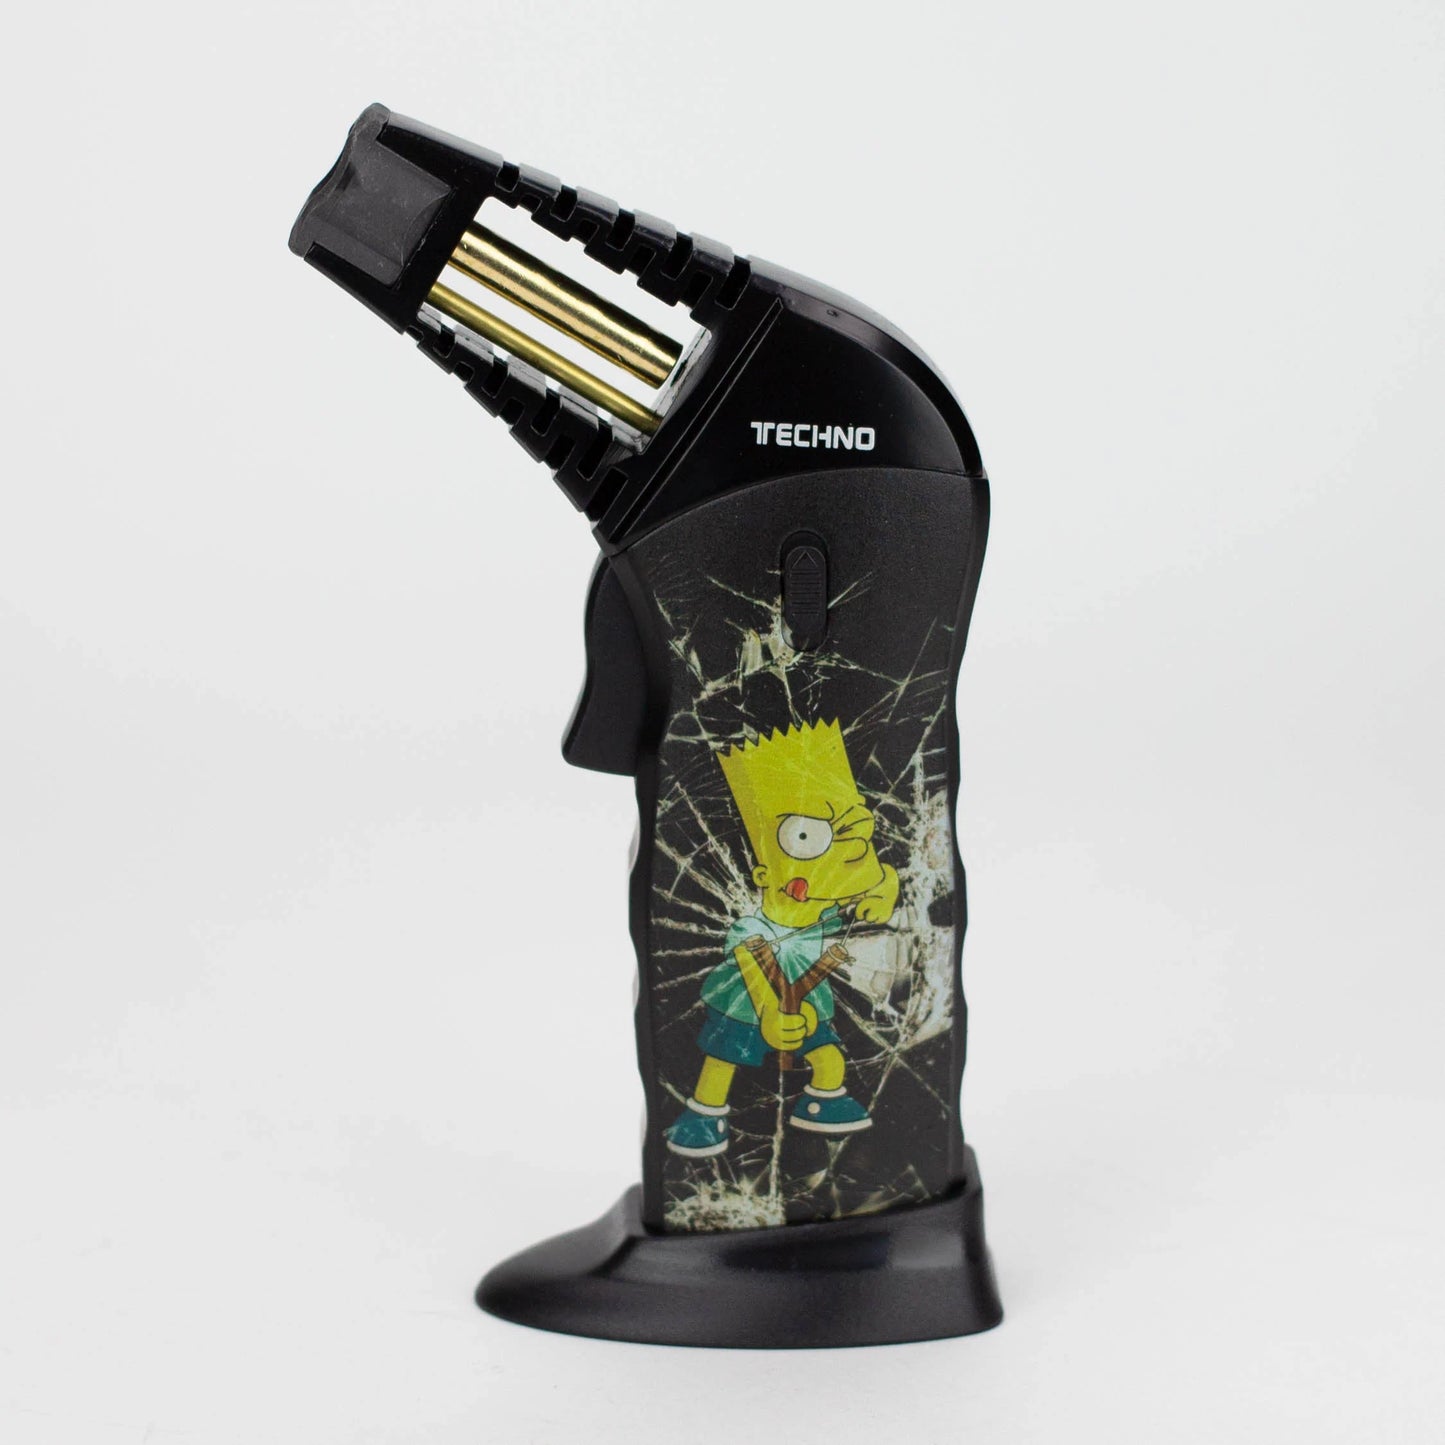 Techno | Adjustable Single Jet slant Torch Lighter in gift box [15811]_5